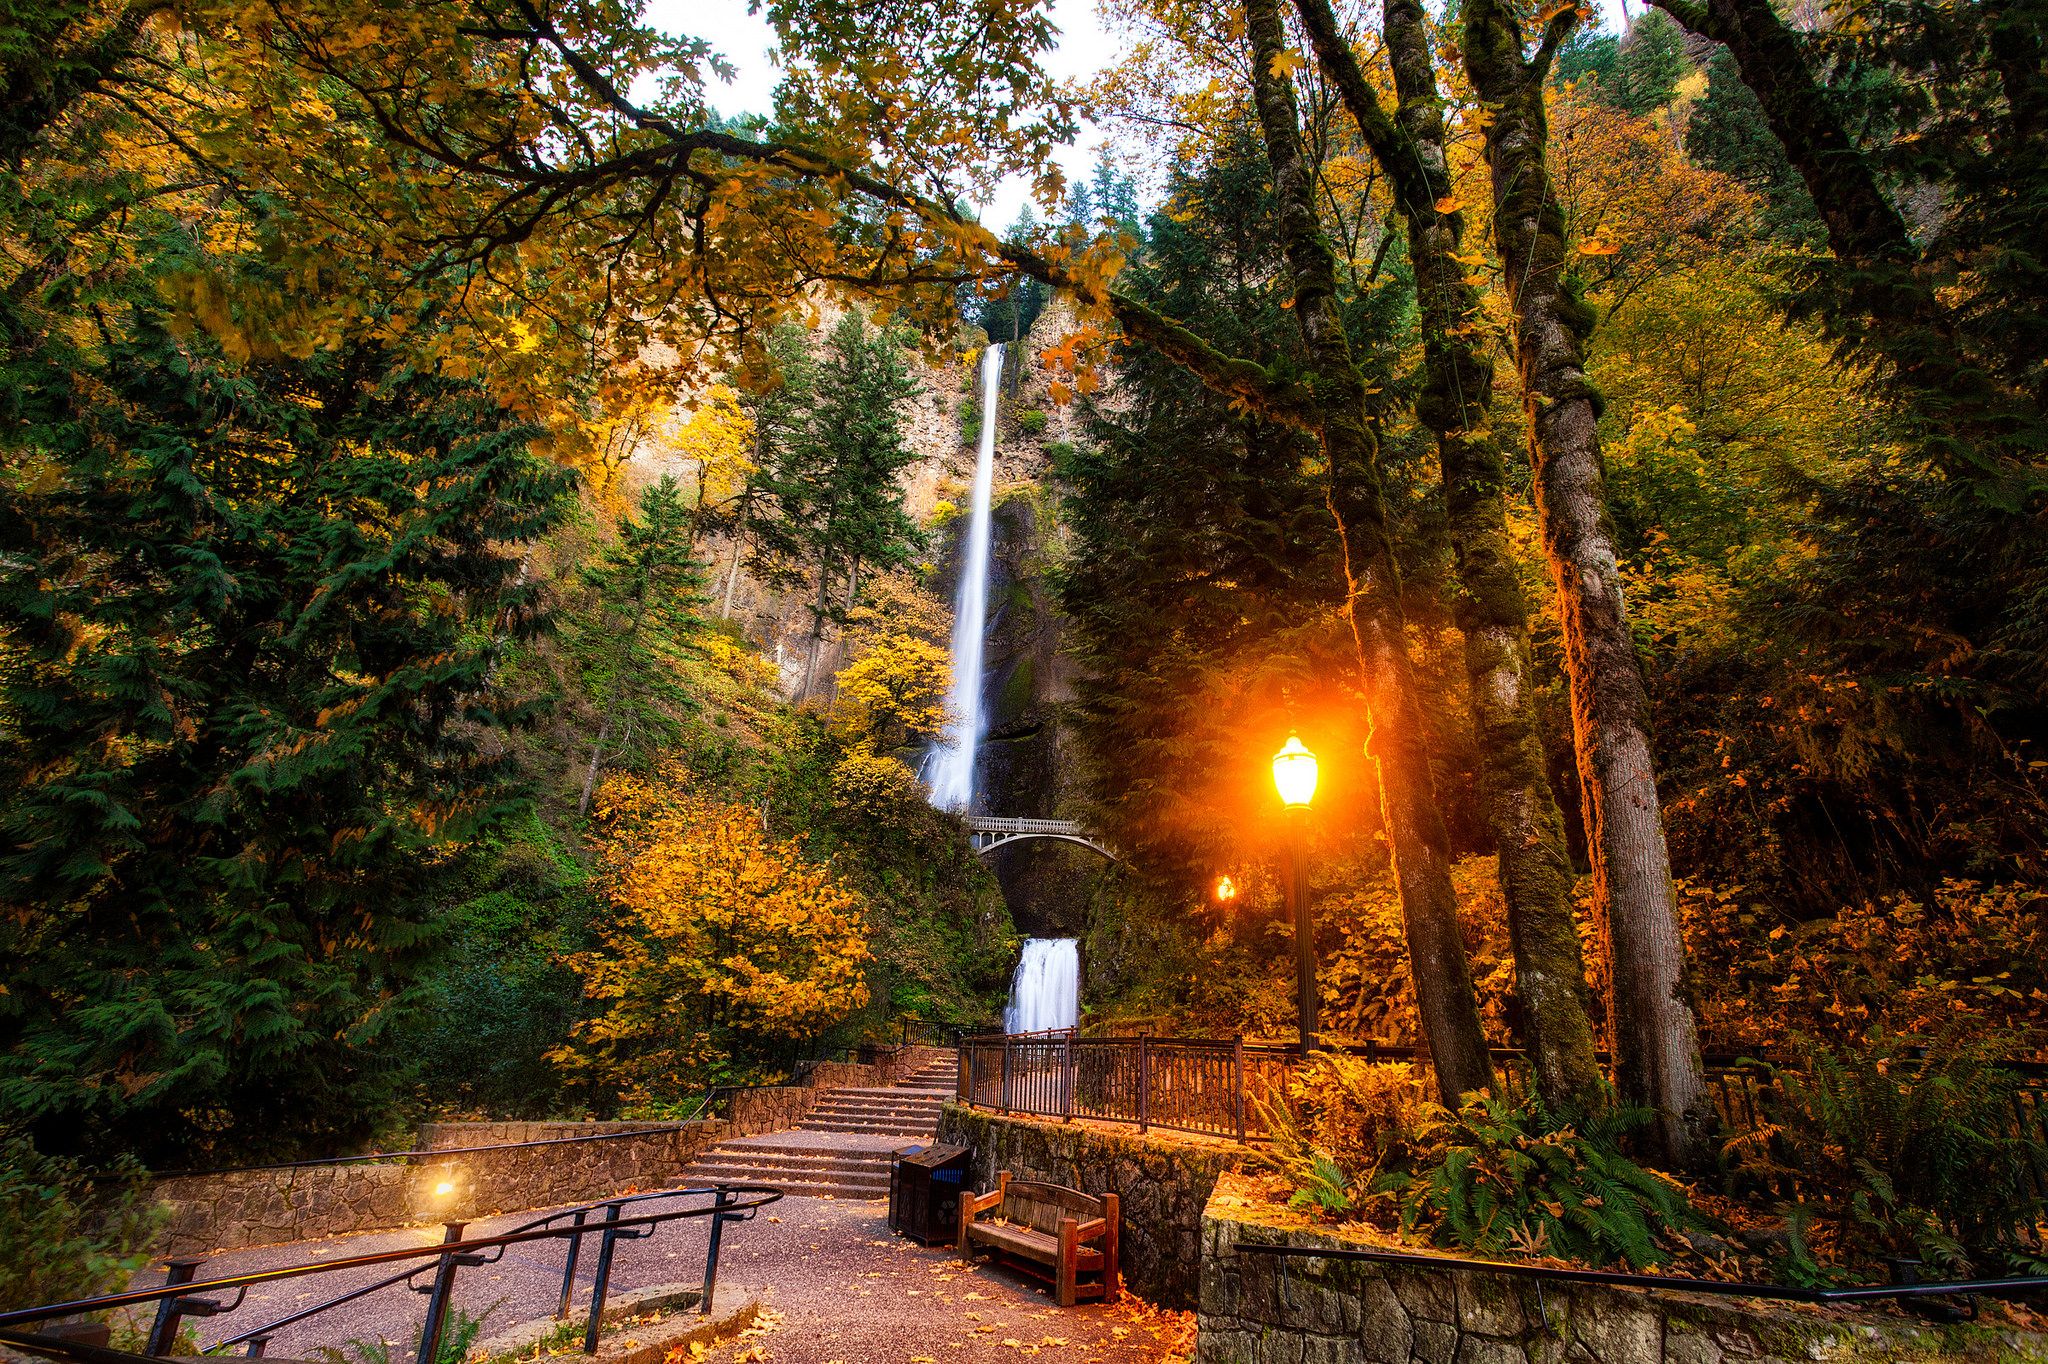 Stunning Photo Of Oregon's Fall Foliage. That Oregon Life